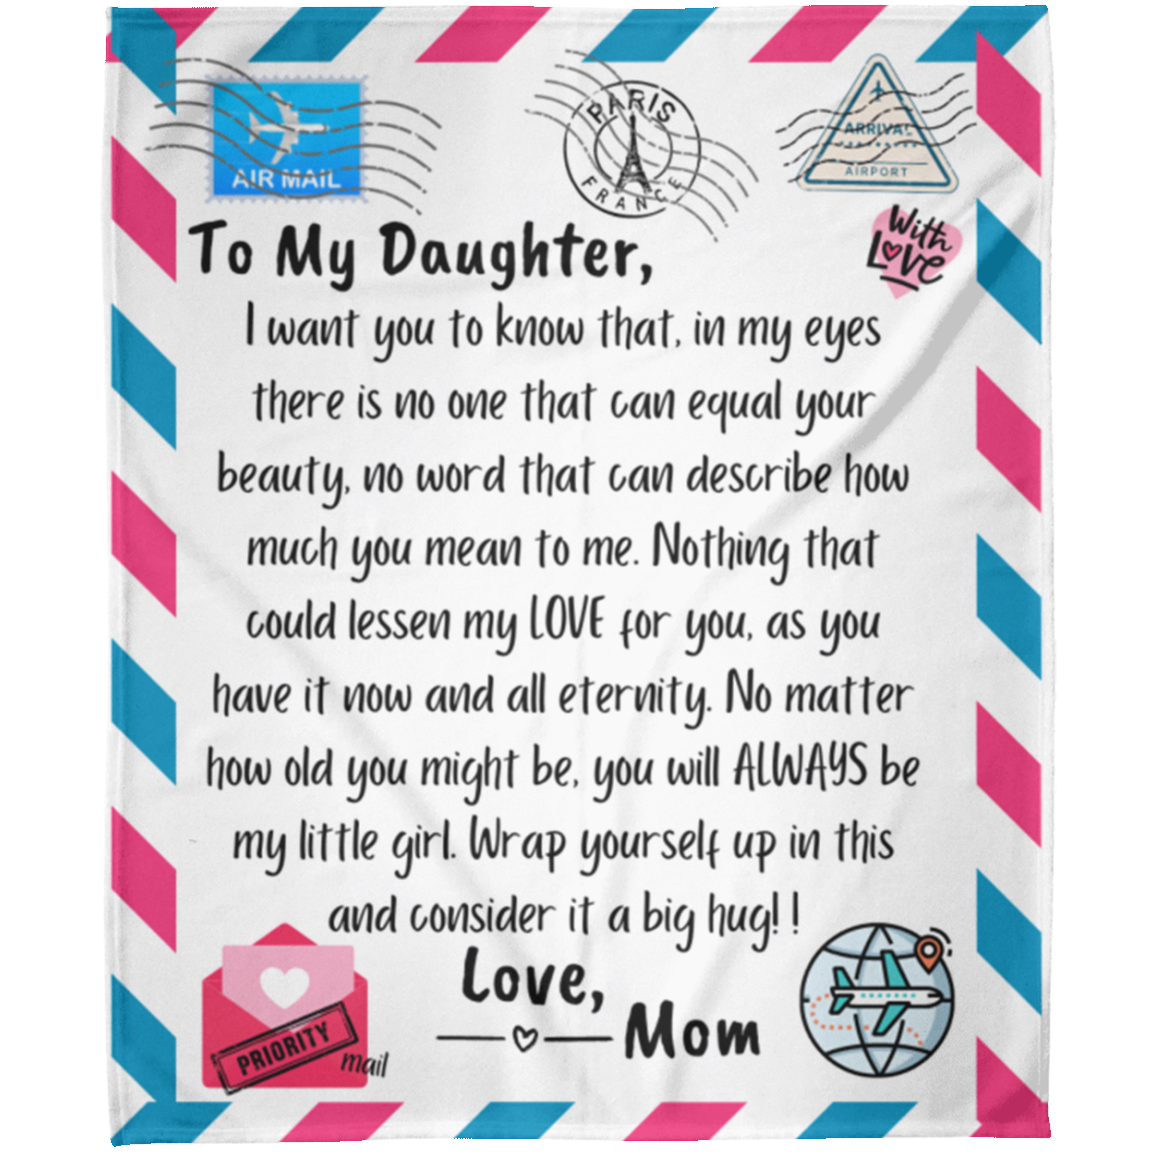 To My Daughter from Mom - Beauty (1) Fleece Blanket 50x60